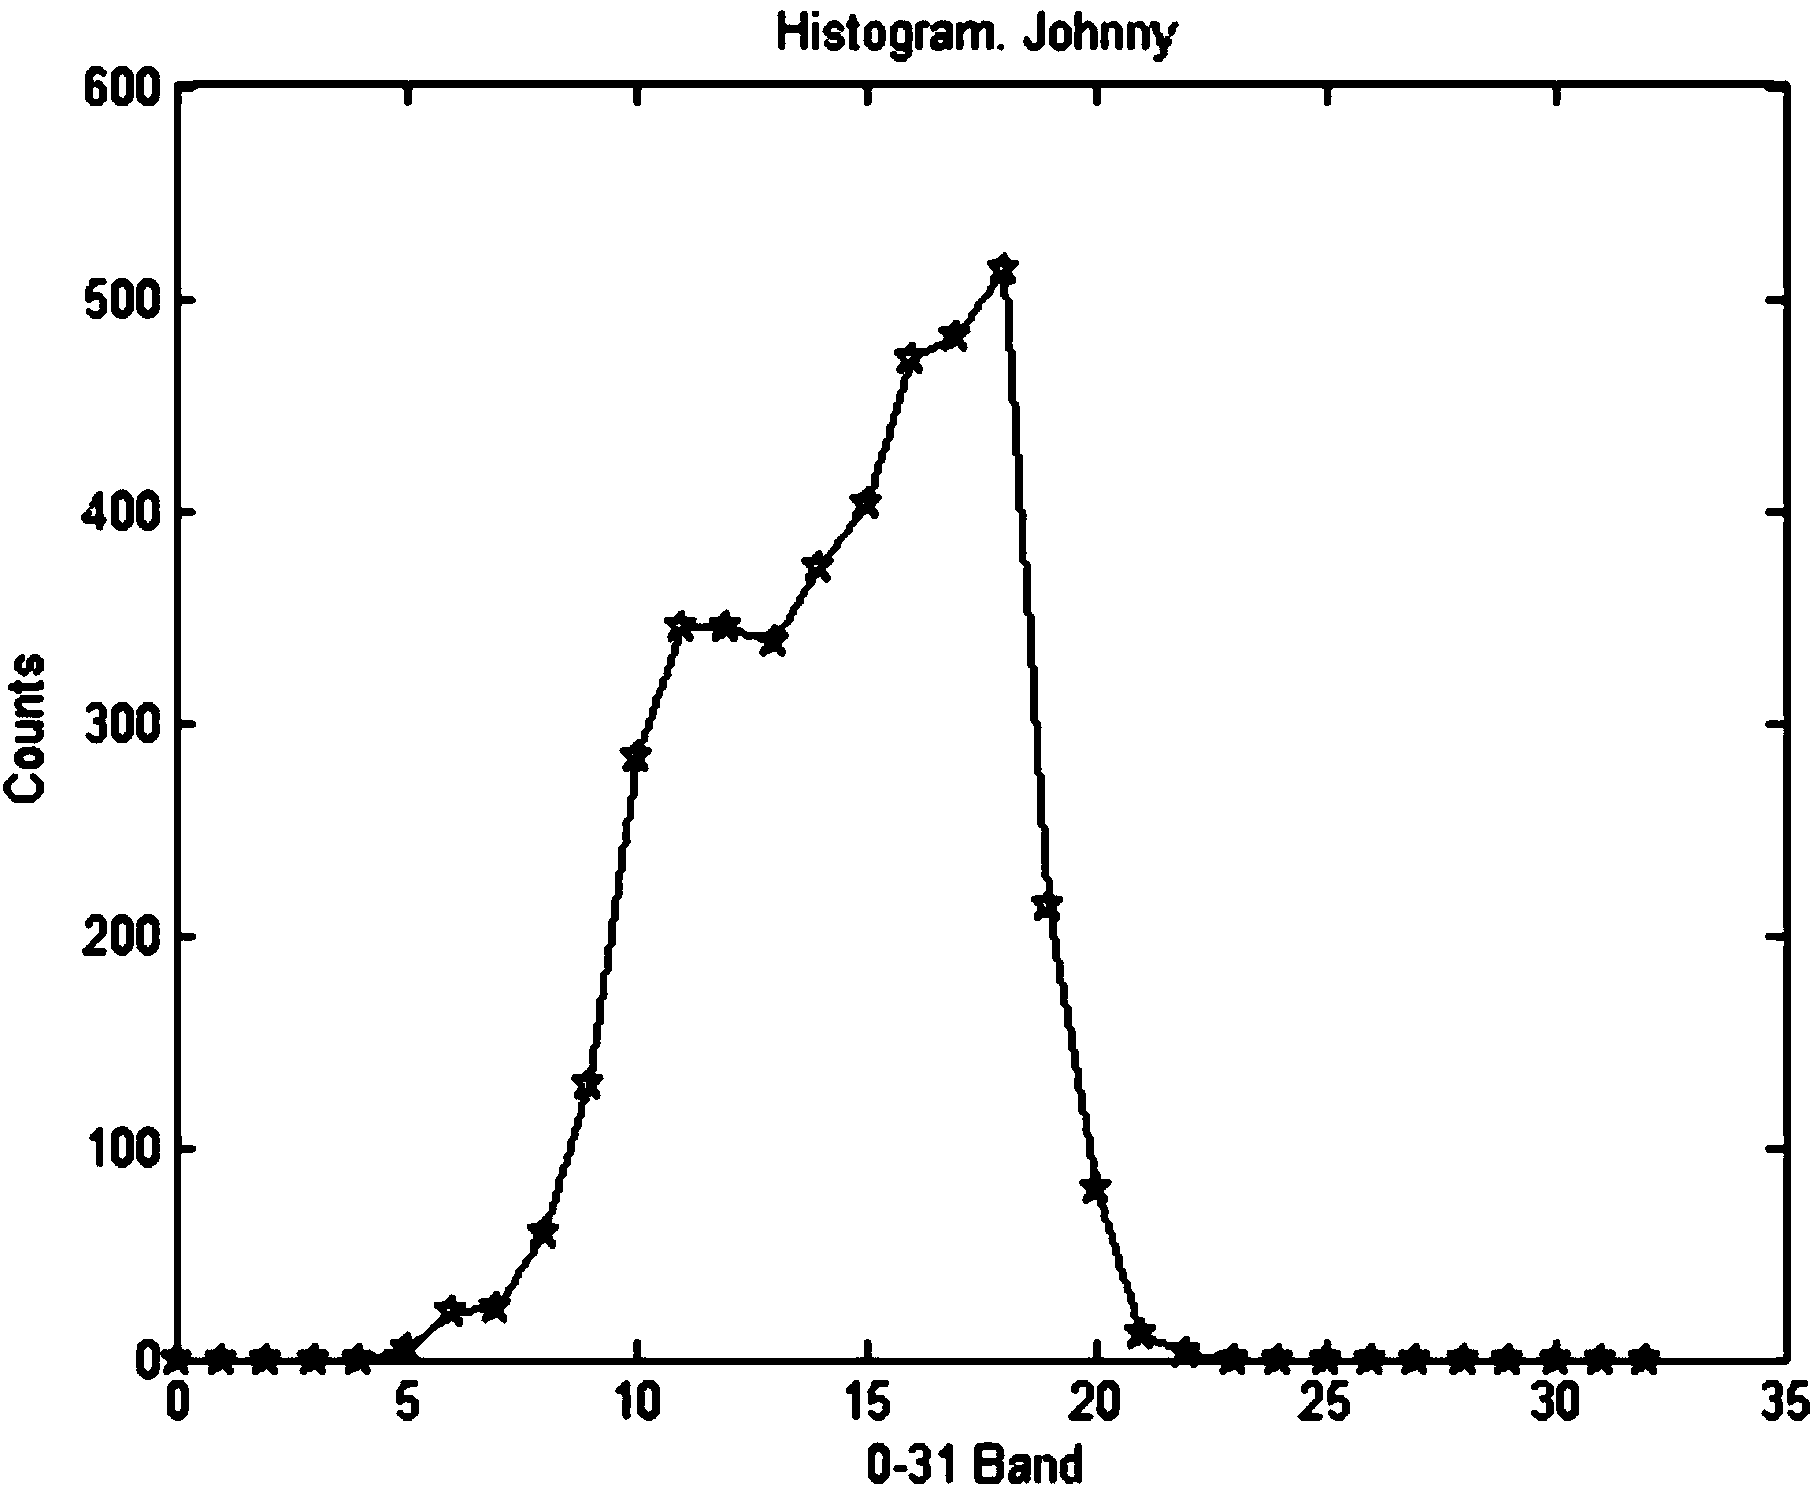 Improved sample adaptive offset filtering method based on histogram analysis